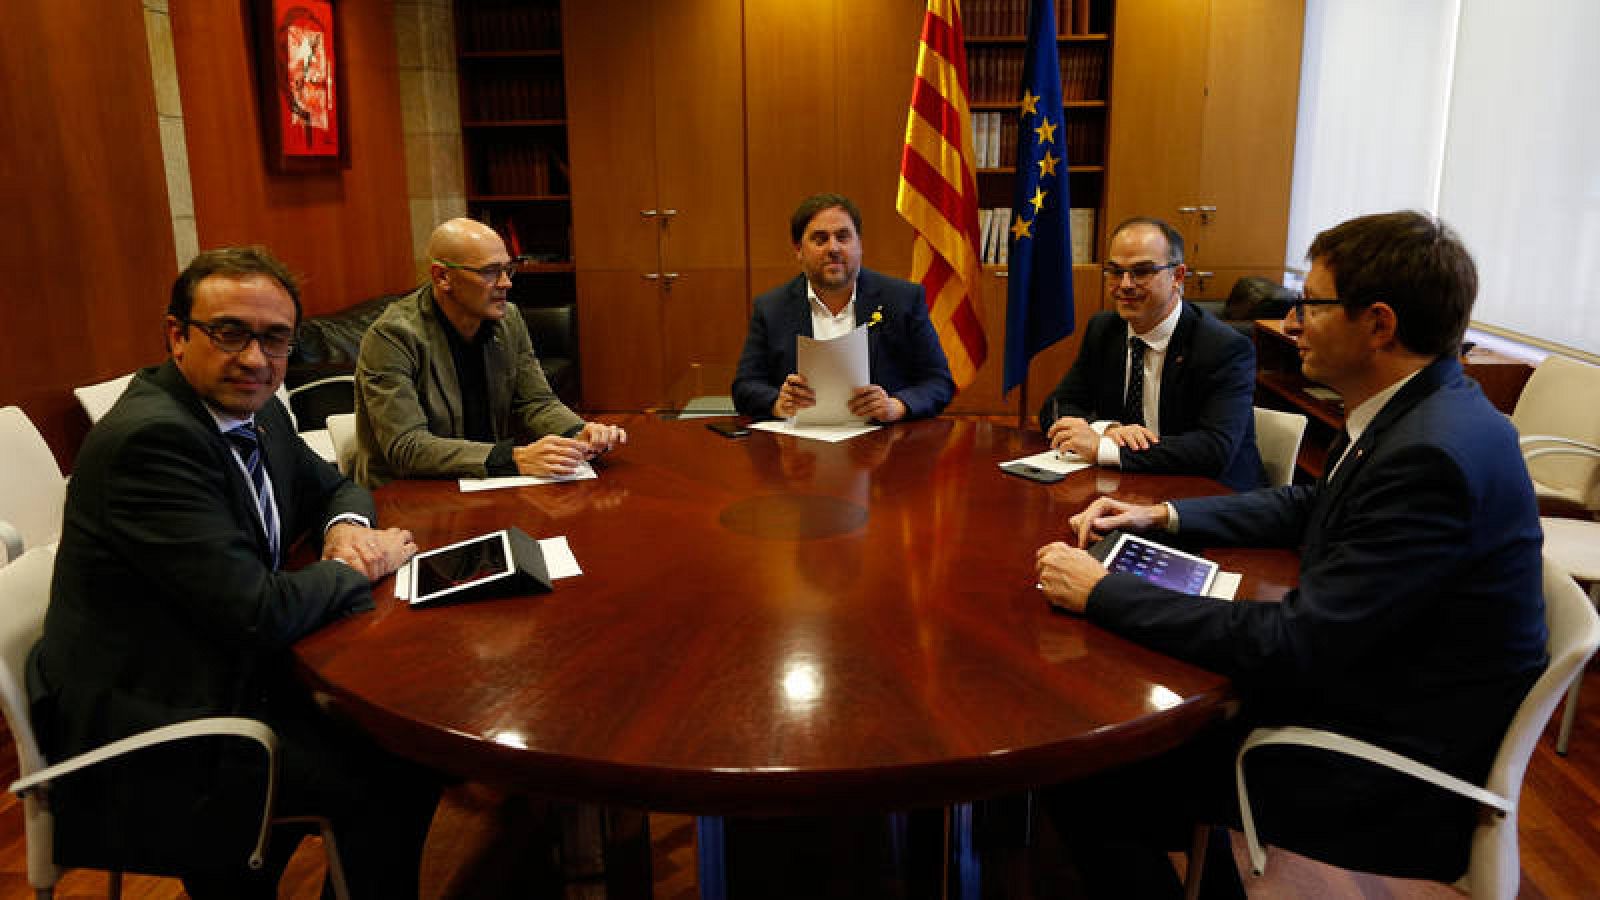 Los exconsellers del Govern Josep Rull, Raül Romeva, Oriol Junqueras, Carles Mundó, y Jordi Turull